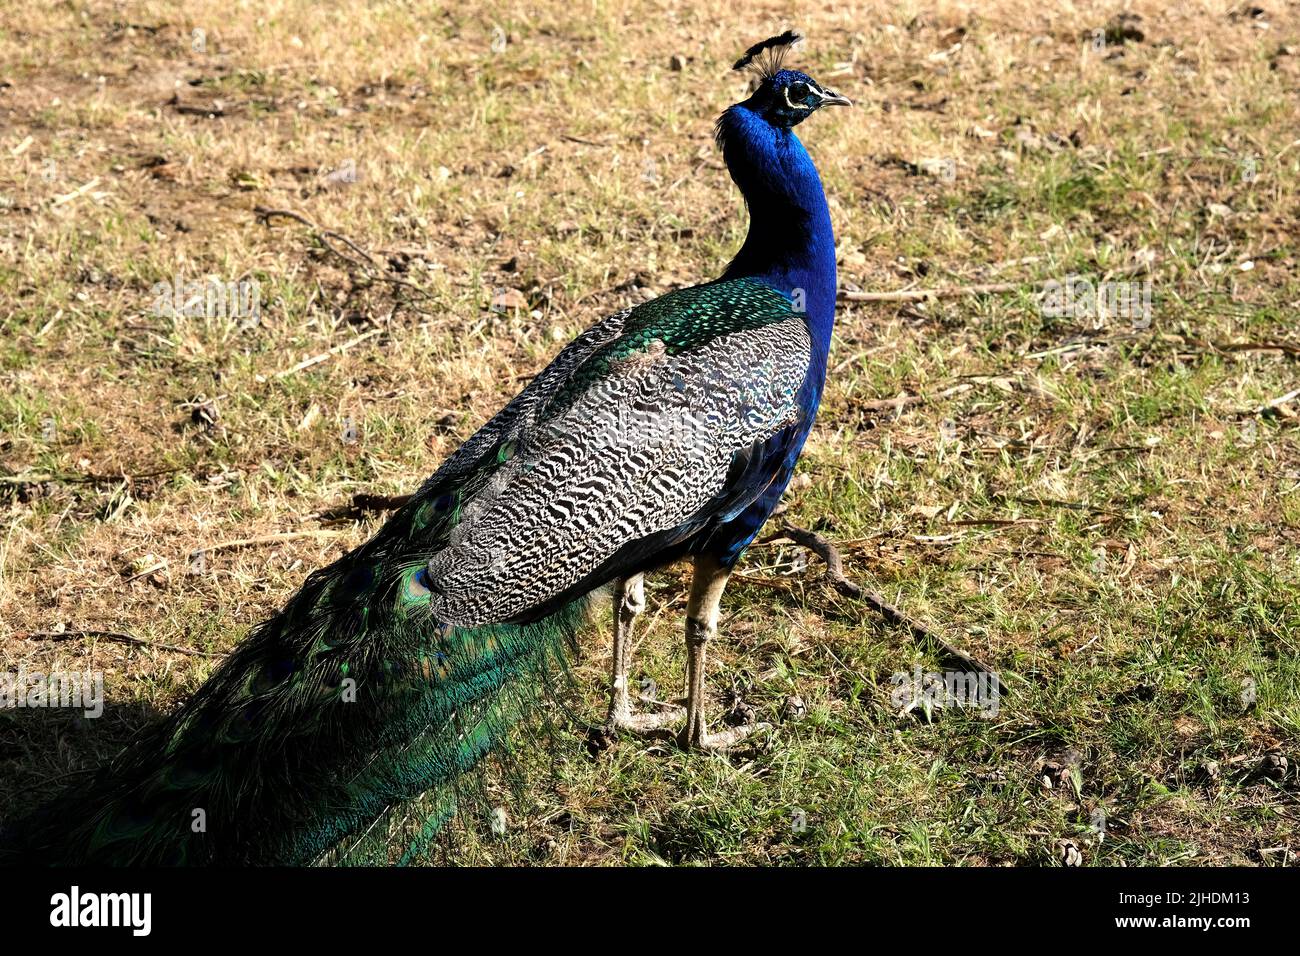 Peacock displaying its plumage Stock Photo